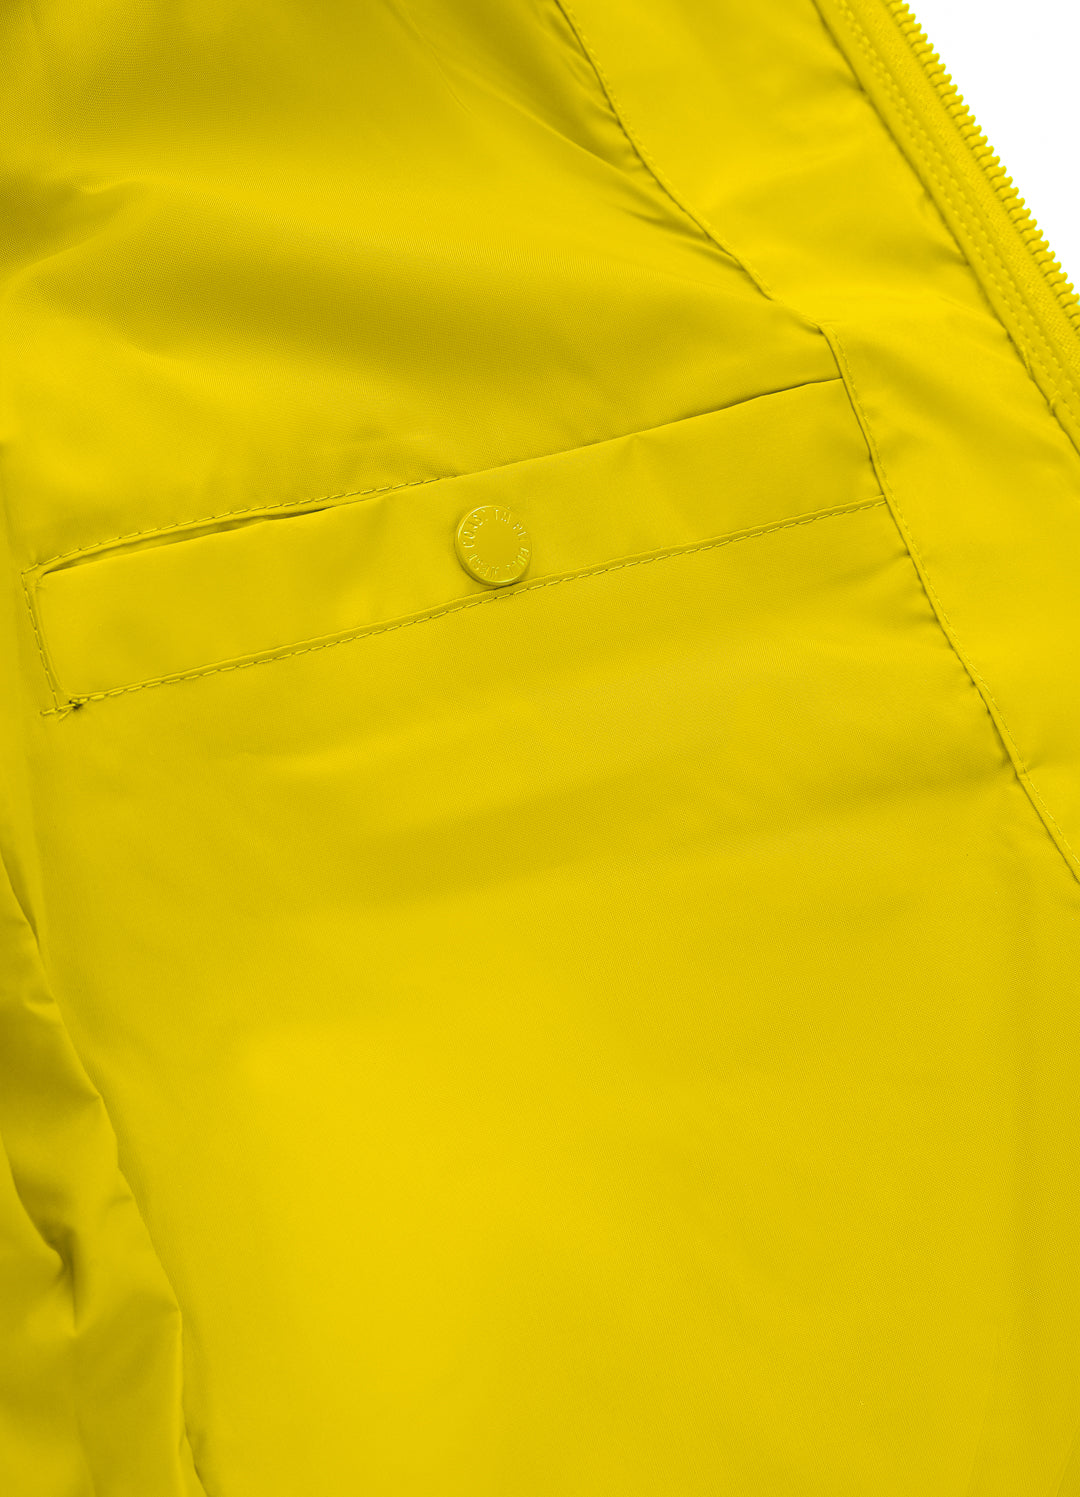 FIRESTONE Yellow Jacket.